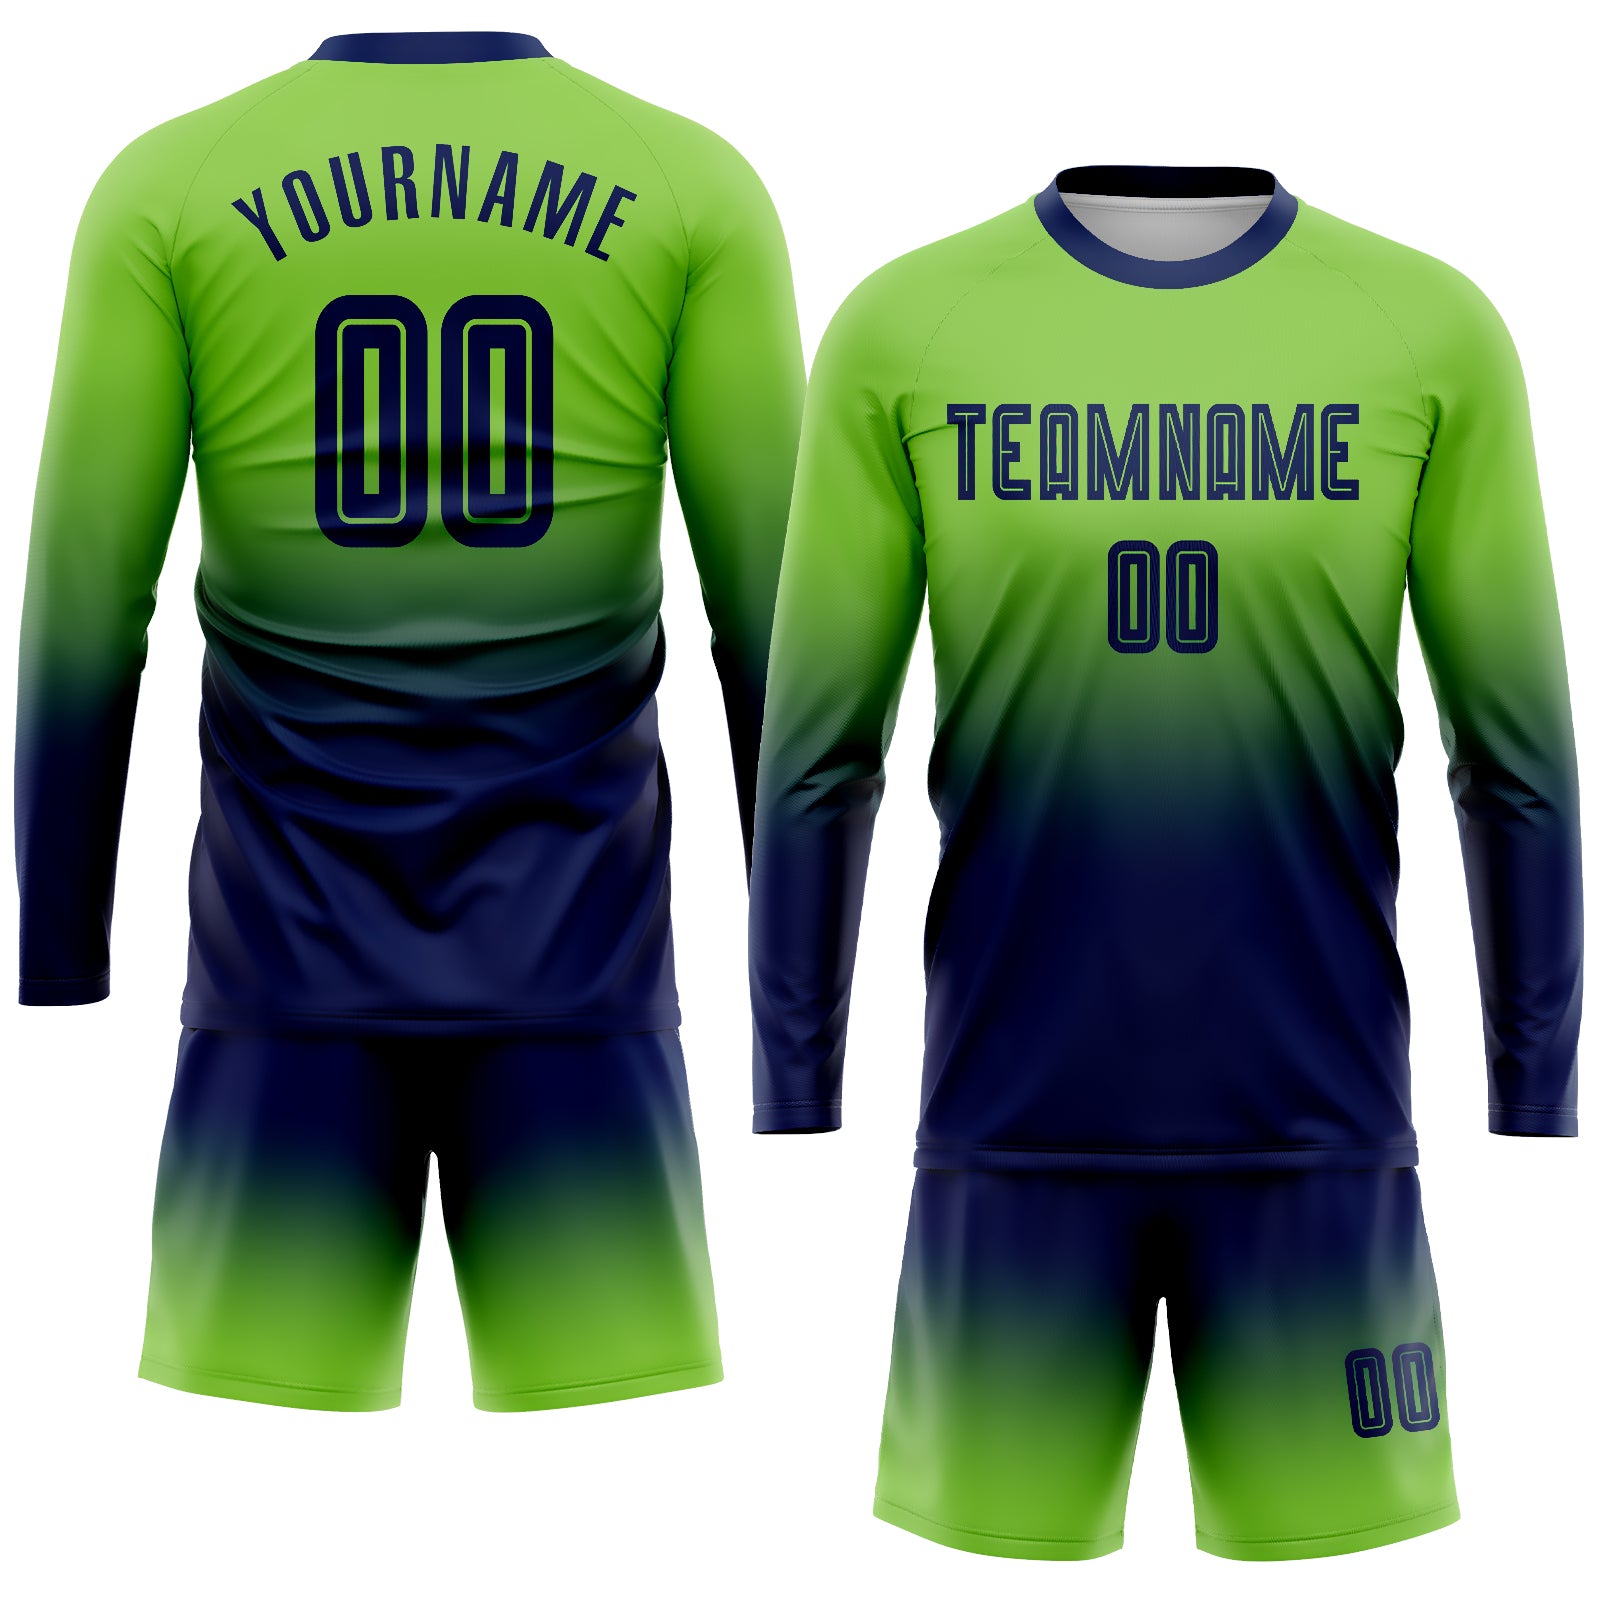 Custom Neon Green Purple-White Sublimation Soccer Uniform Jersey